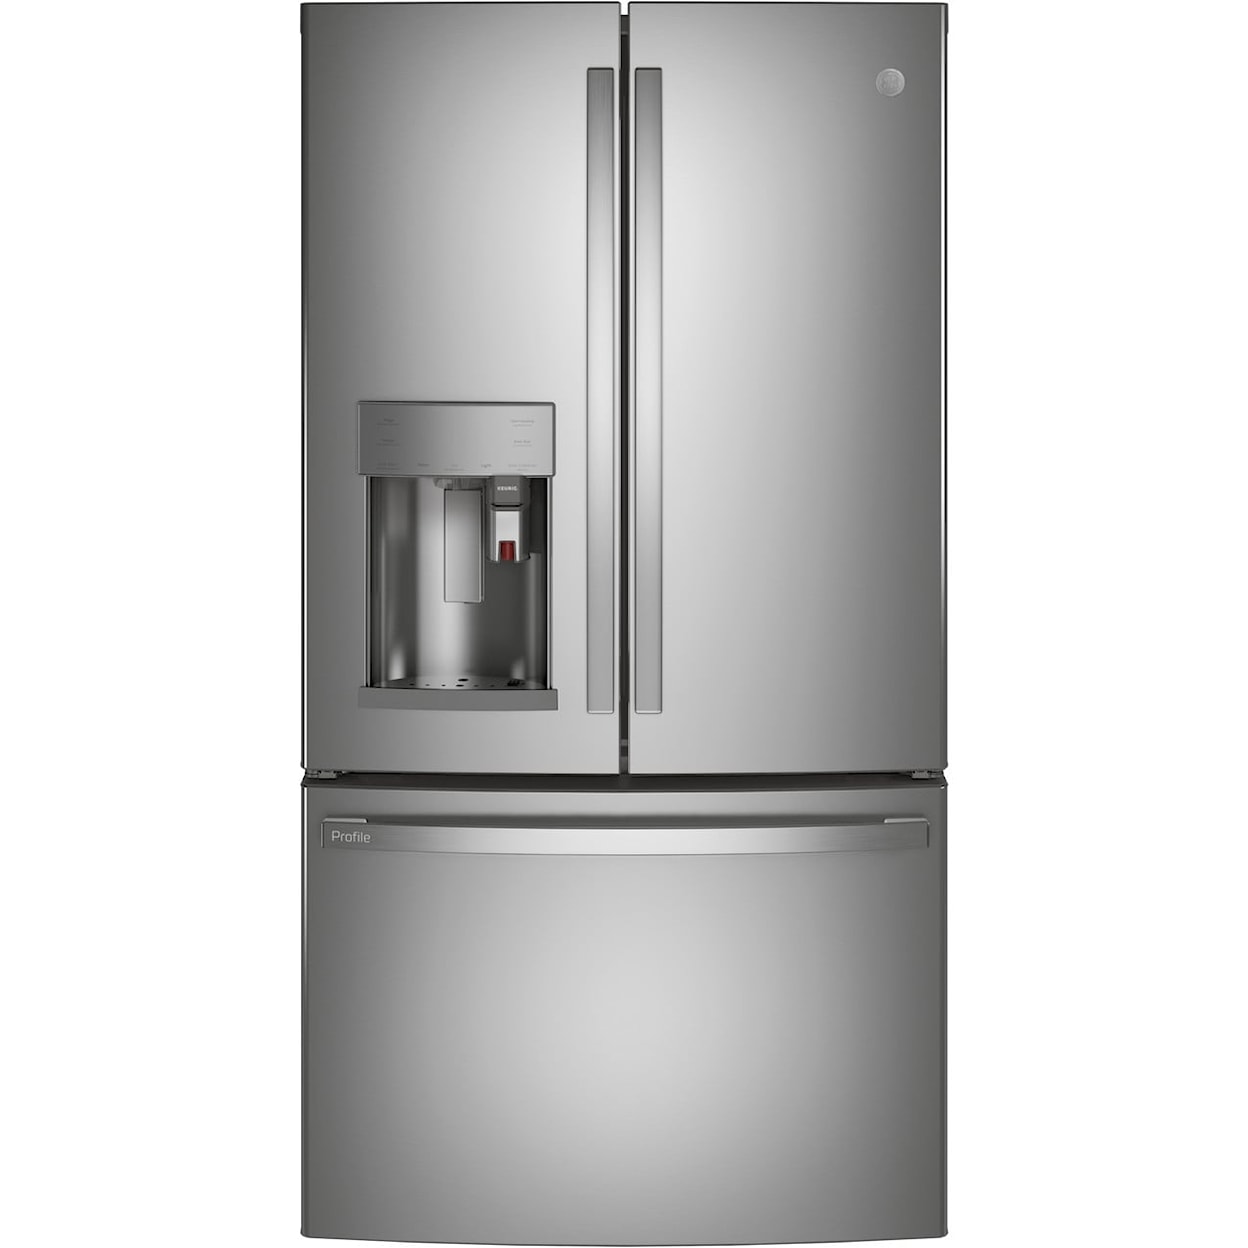 GE Appliances Refrigerators 22.1 cu. ft. French Door Refrigerator